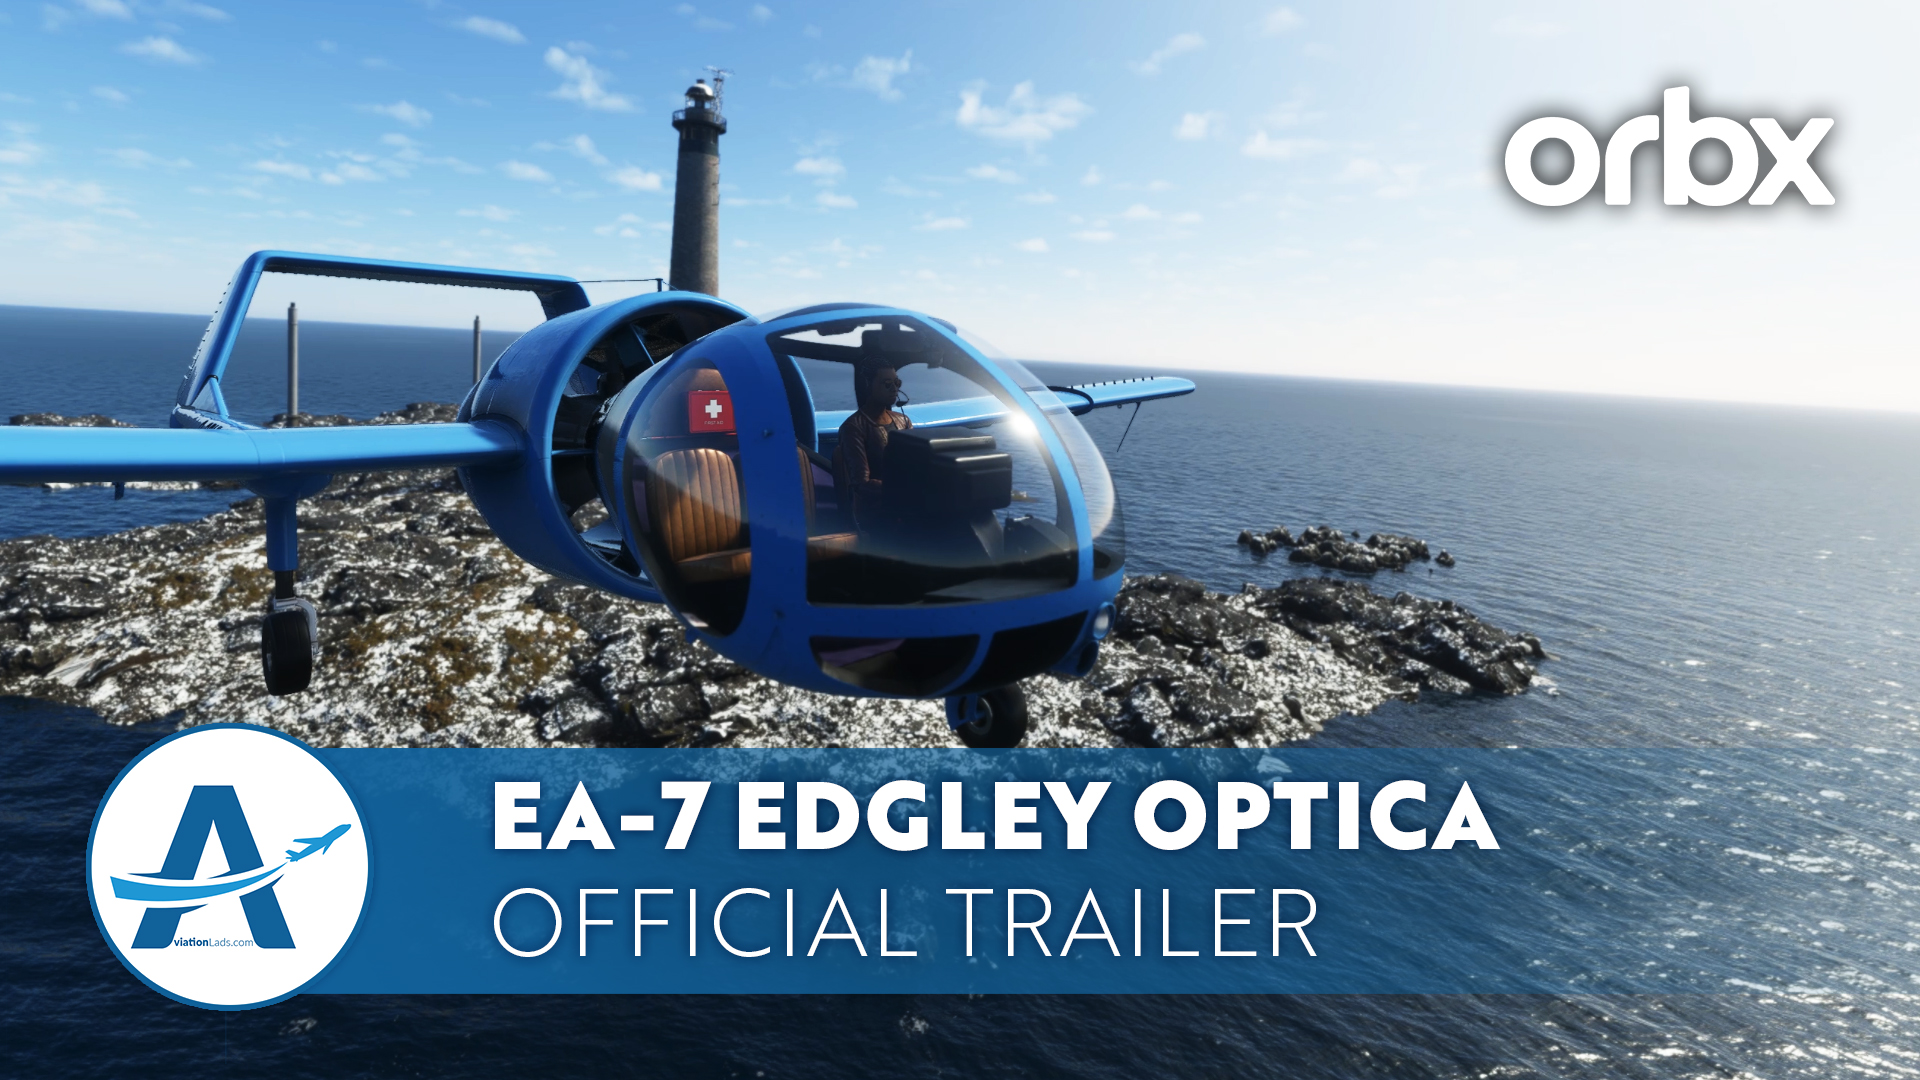 [TRAILER] Orbx EA-7 Edgley Optica